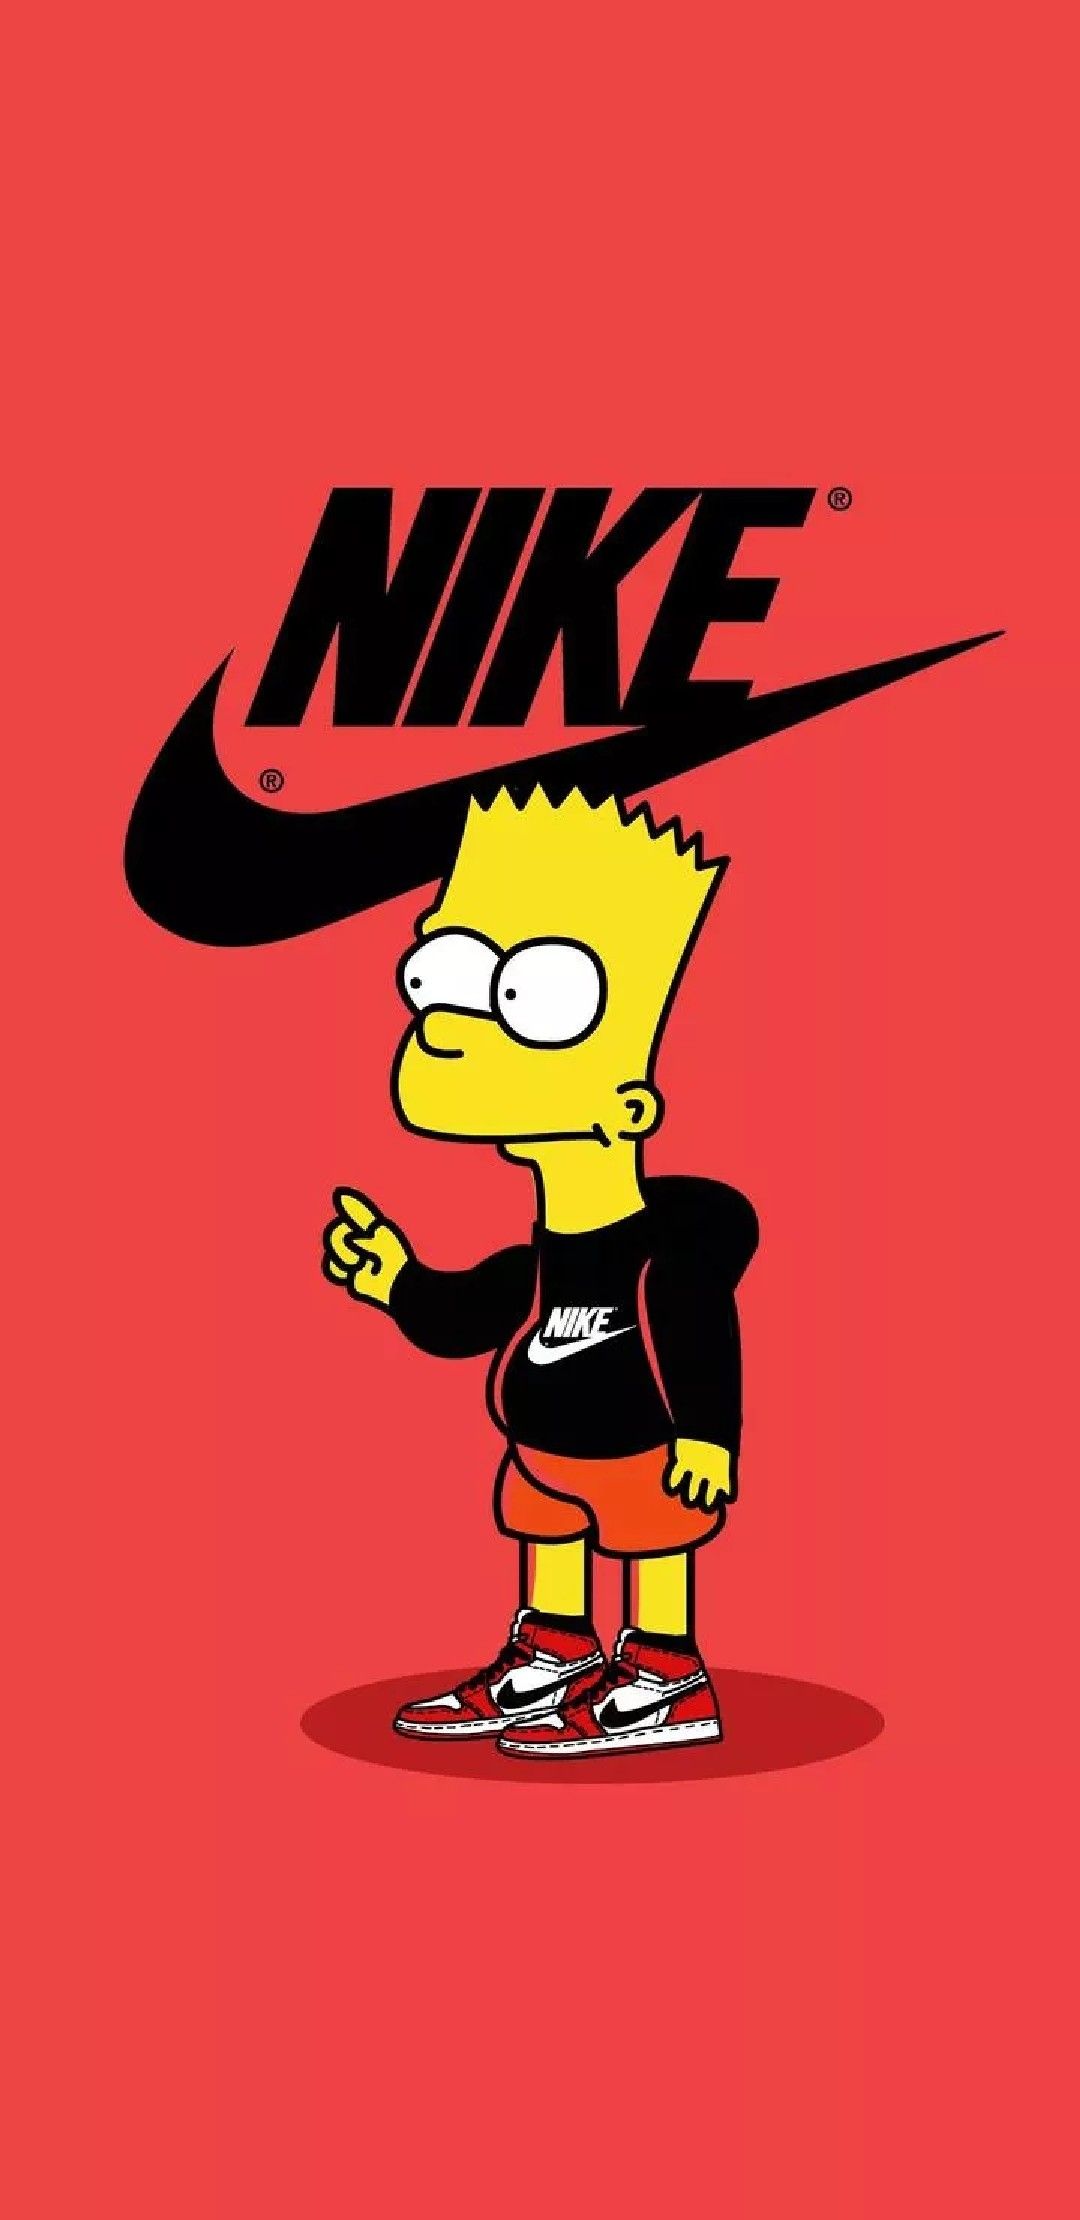 Simpsons Nike Red Full HD Wallpaper. Nike wallpaper, Bart simpson art, Adidas wallpaper background